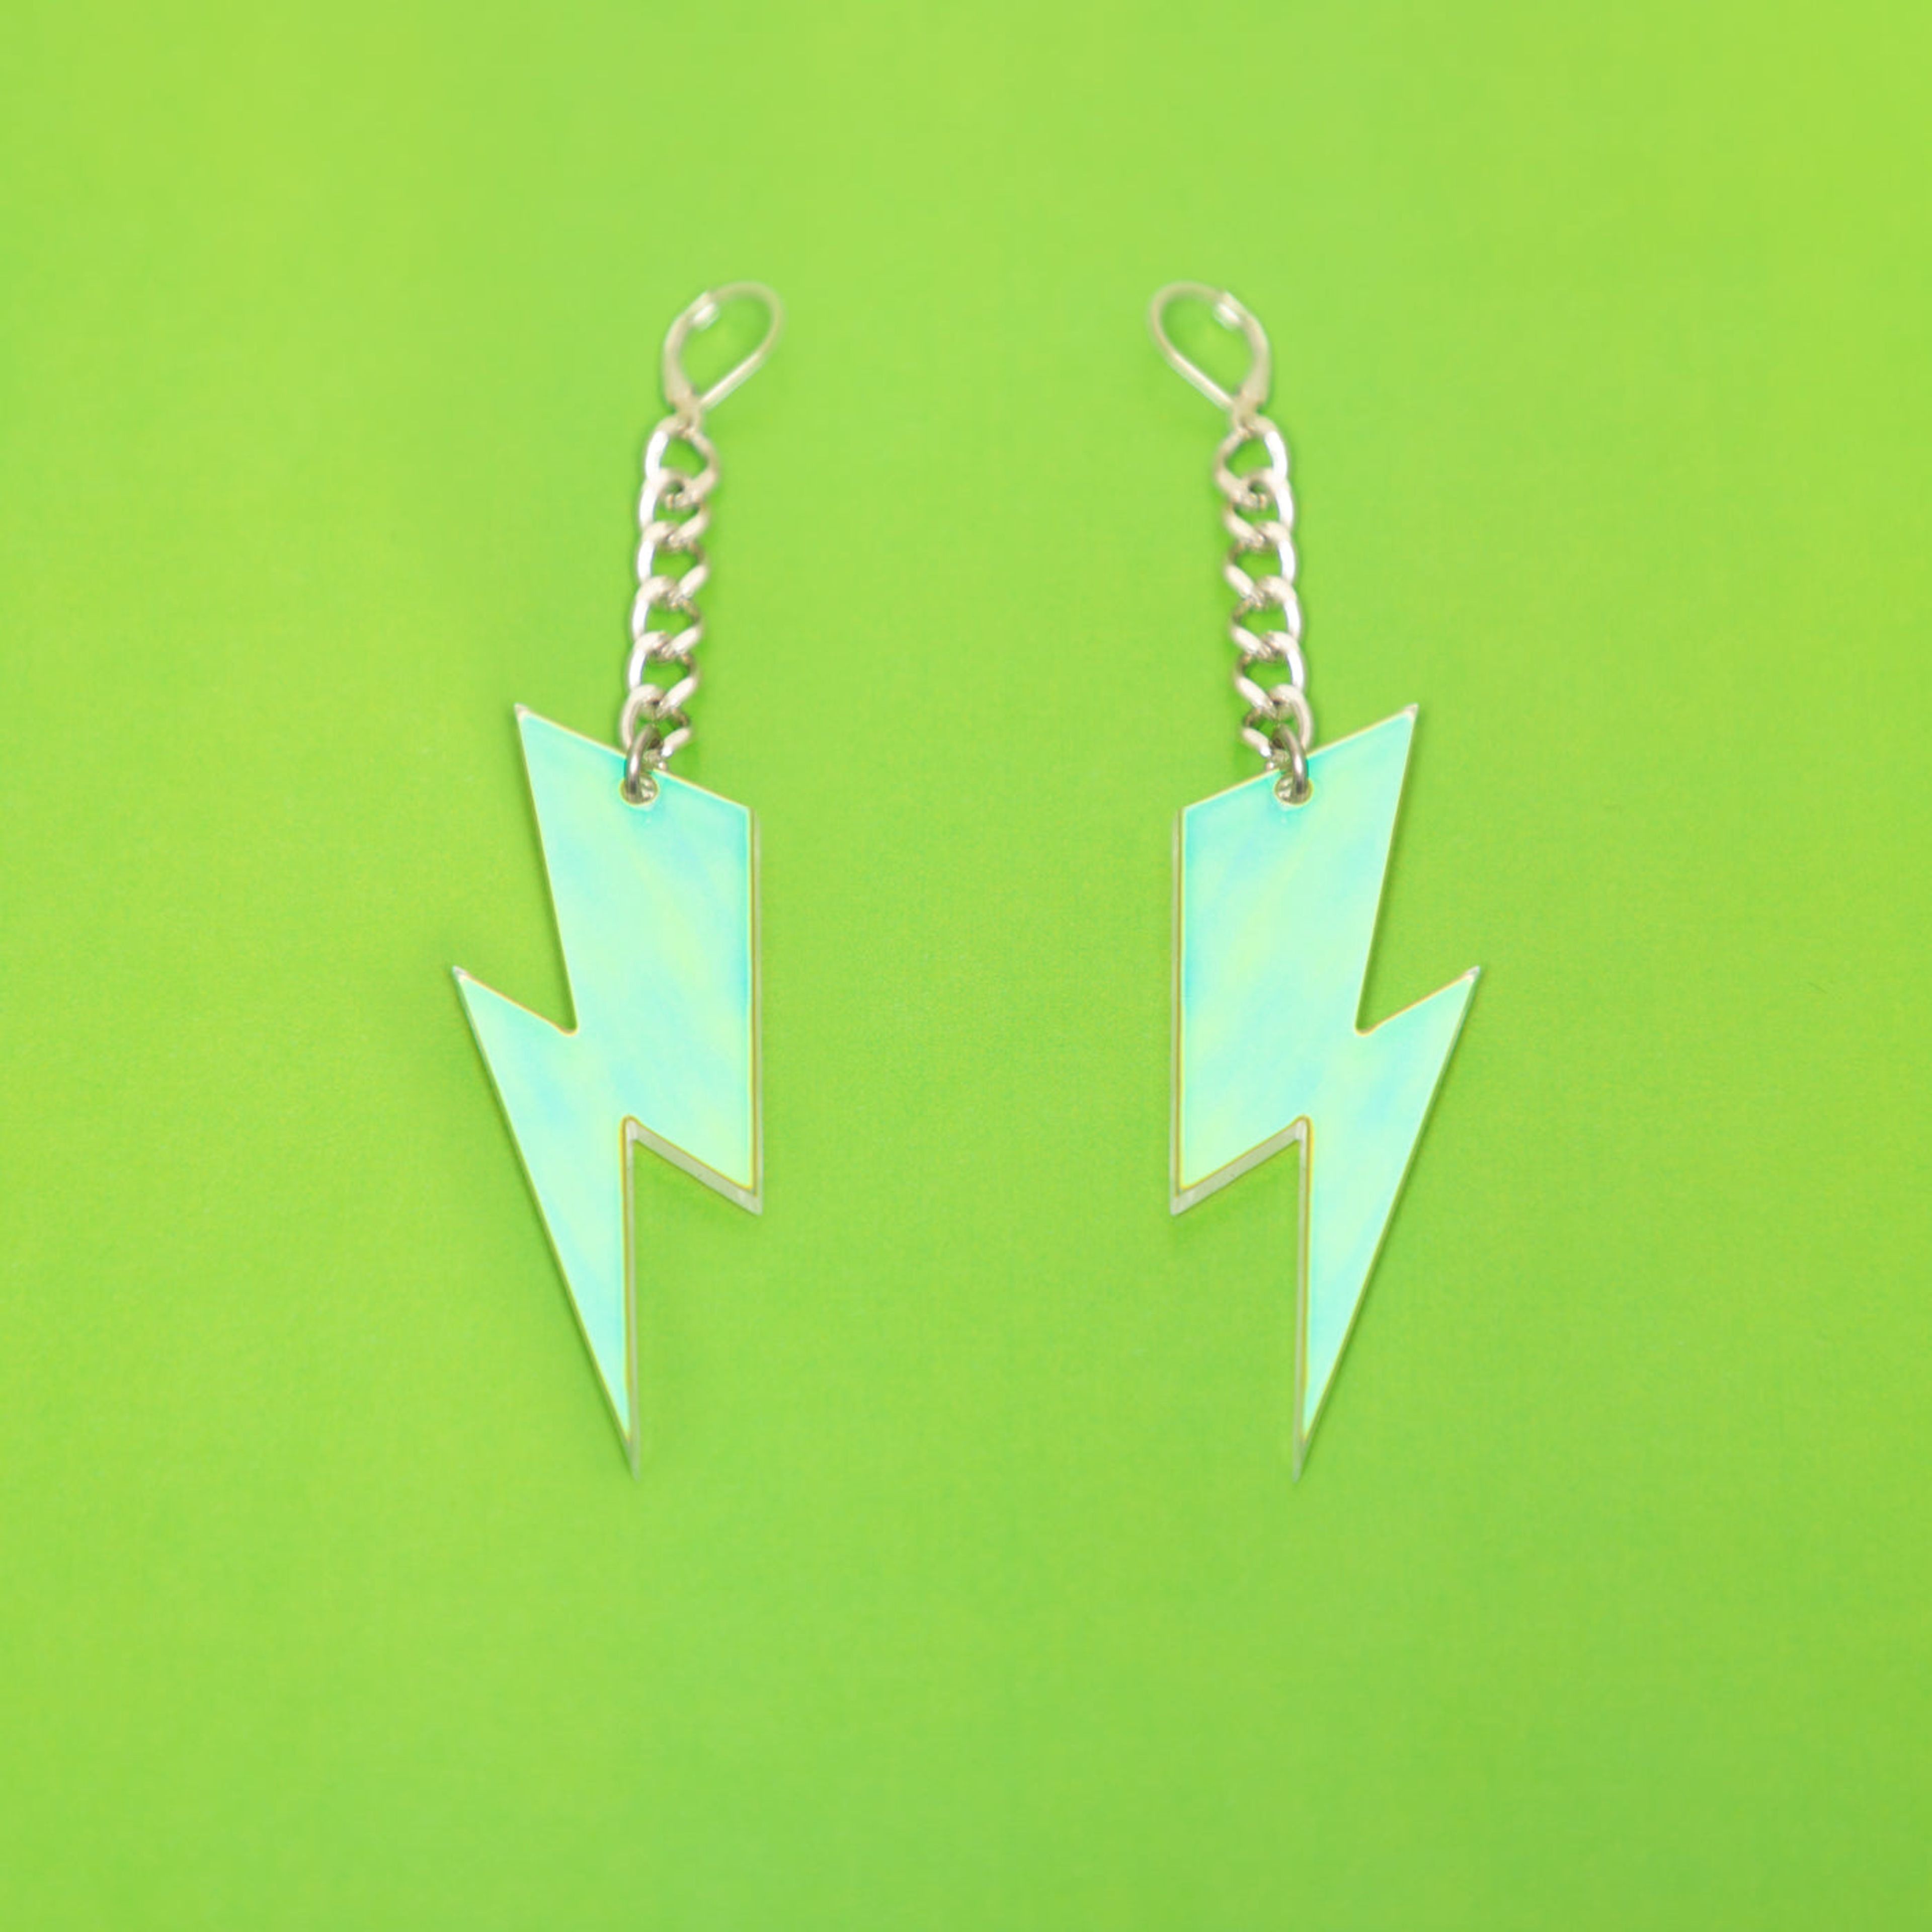 The Ziggy Bolt Chain Earrings